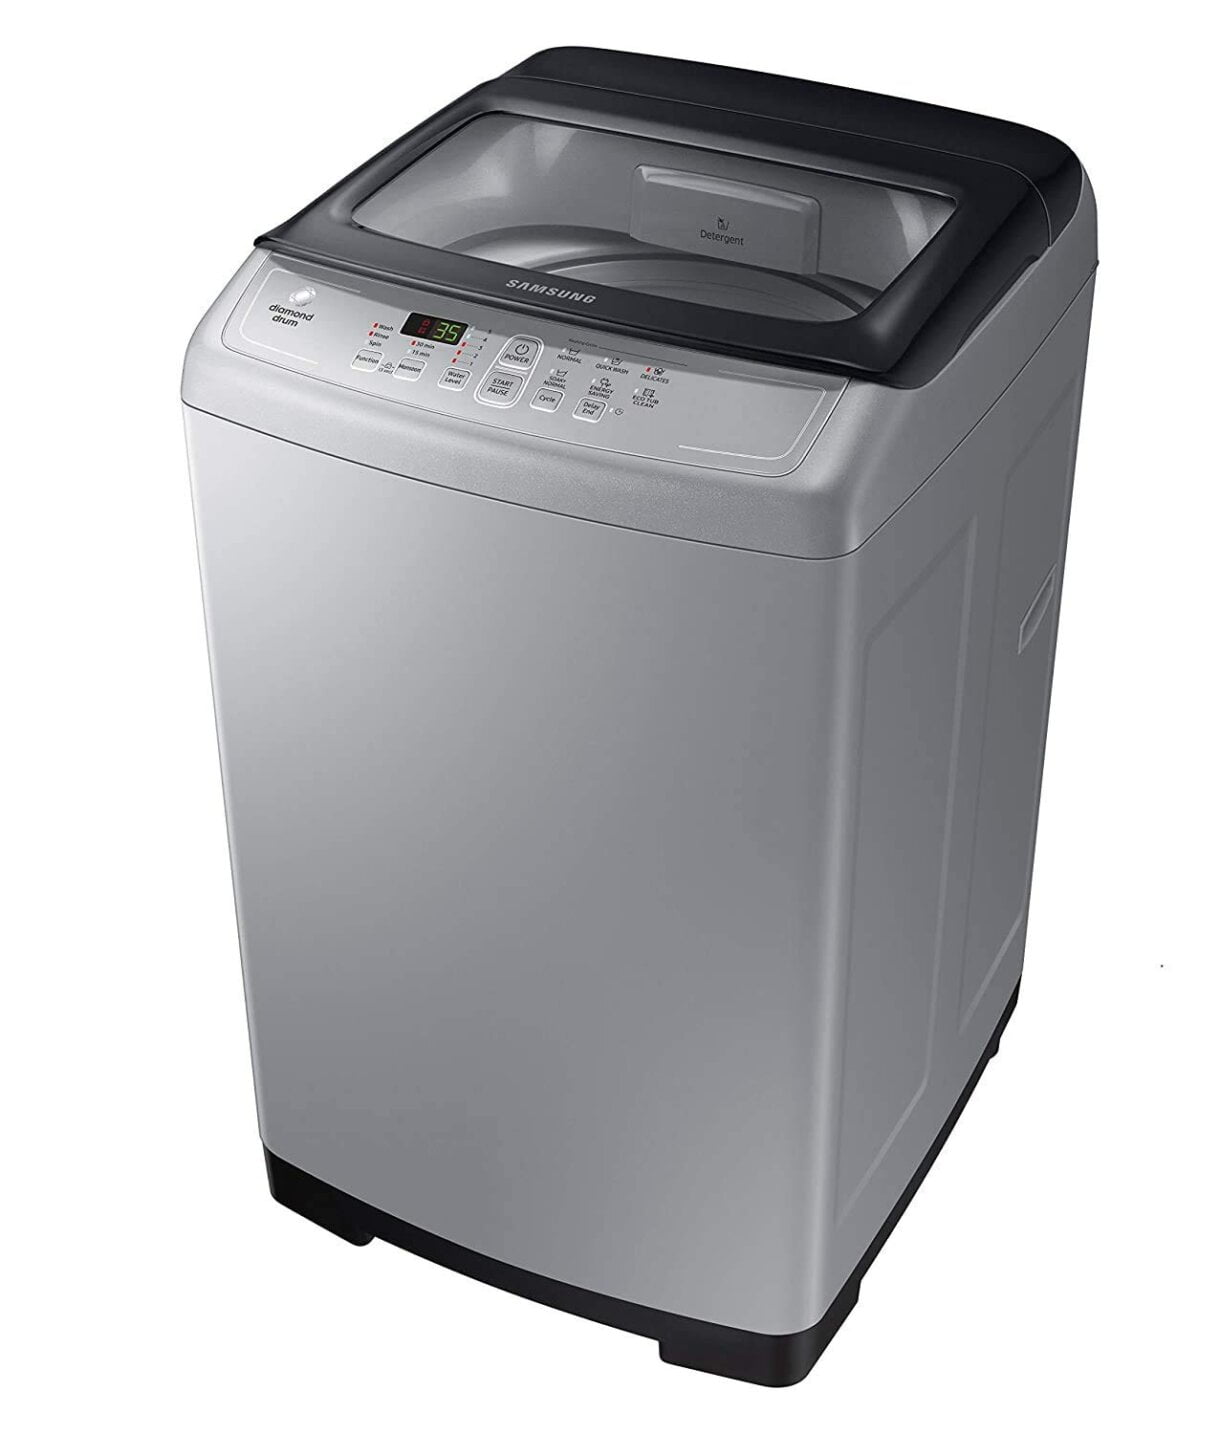 Samsung 6.5 kg Fully-Automatic Top Loading Washing Machine (WA65A4002VS/TL)